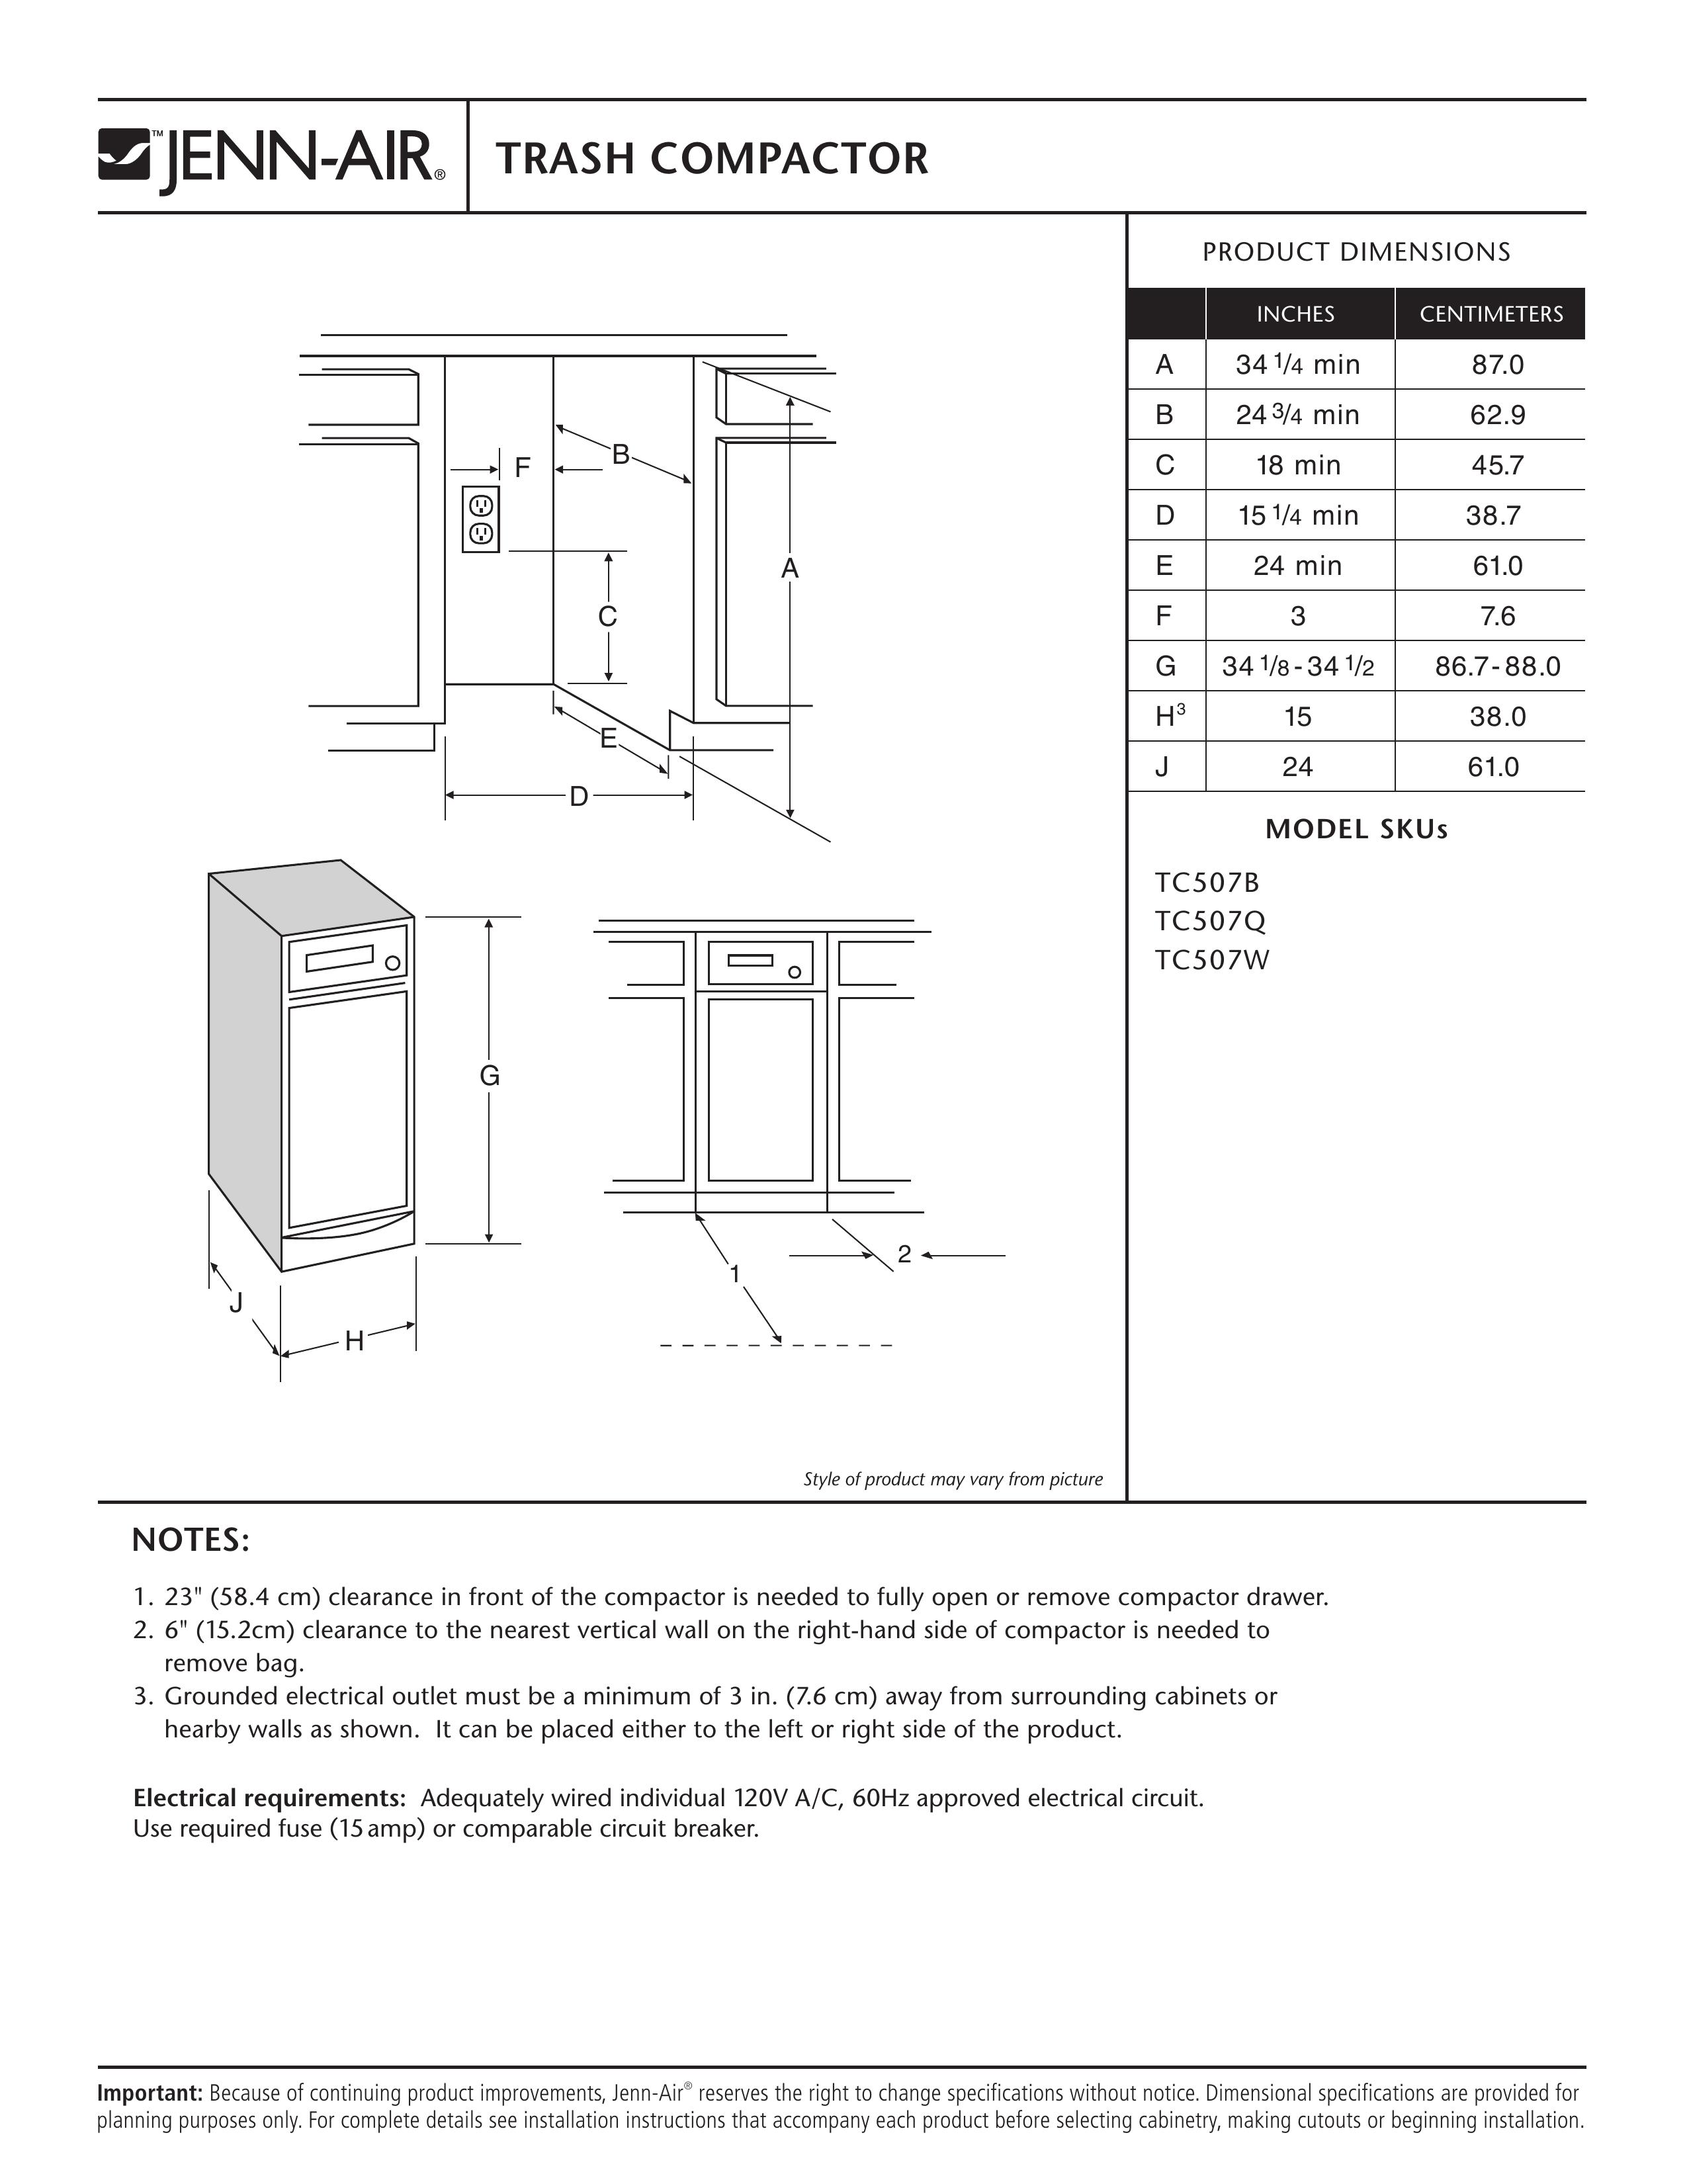 Jenn-Air TC507Q Trash Compactor User Manual